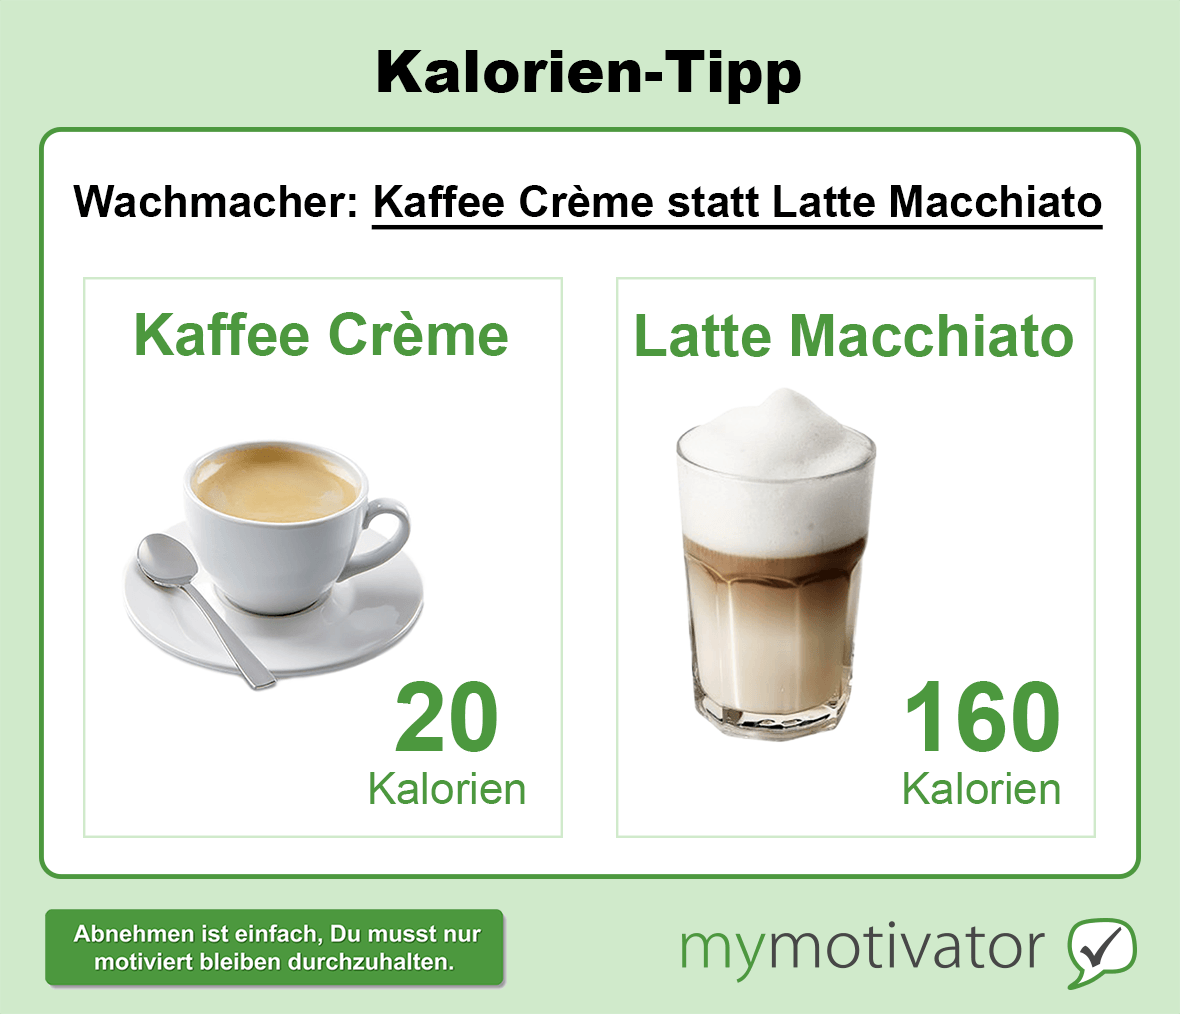 Kalorien-Tipp: Kaffee Crème statt Latte Macchiato